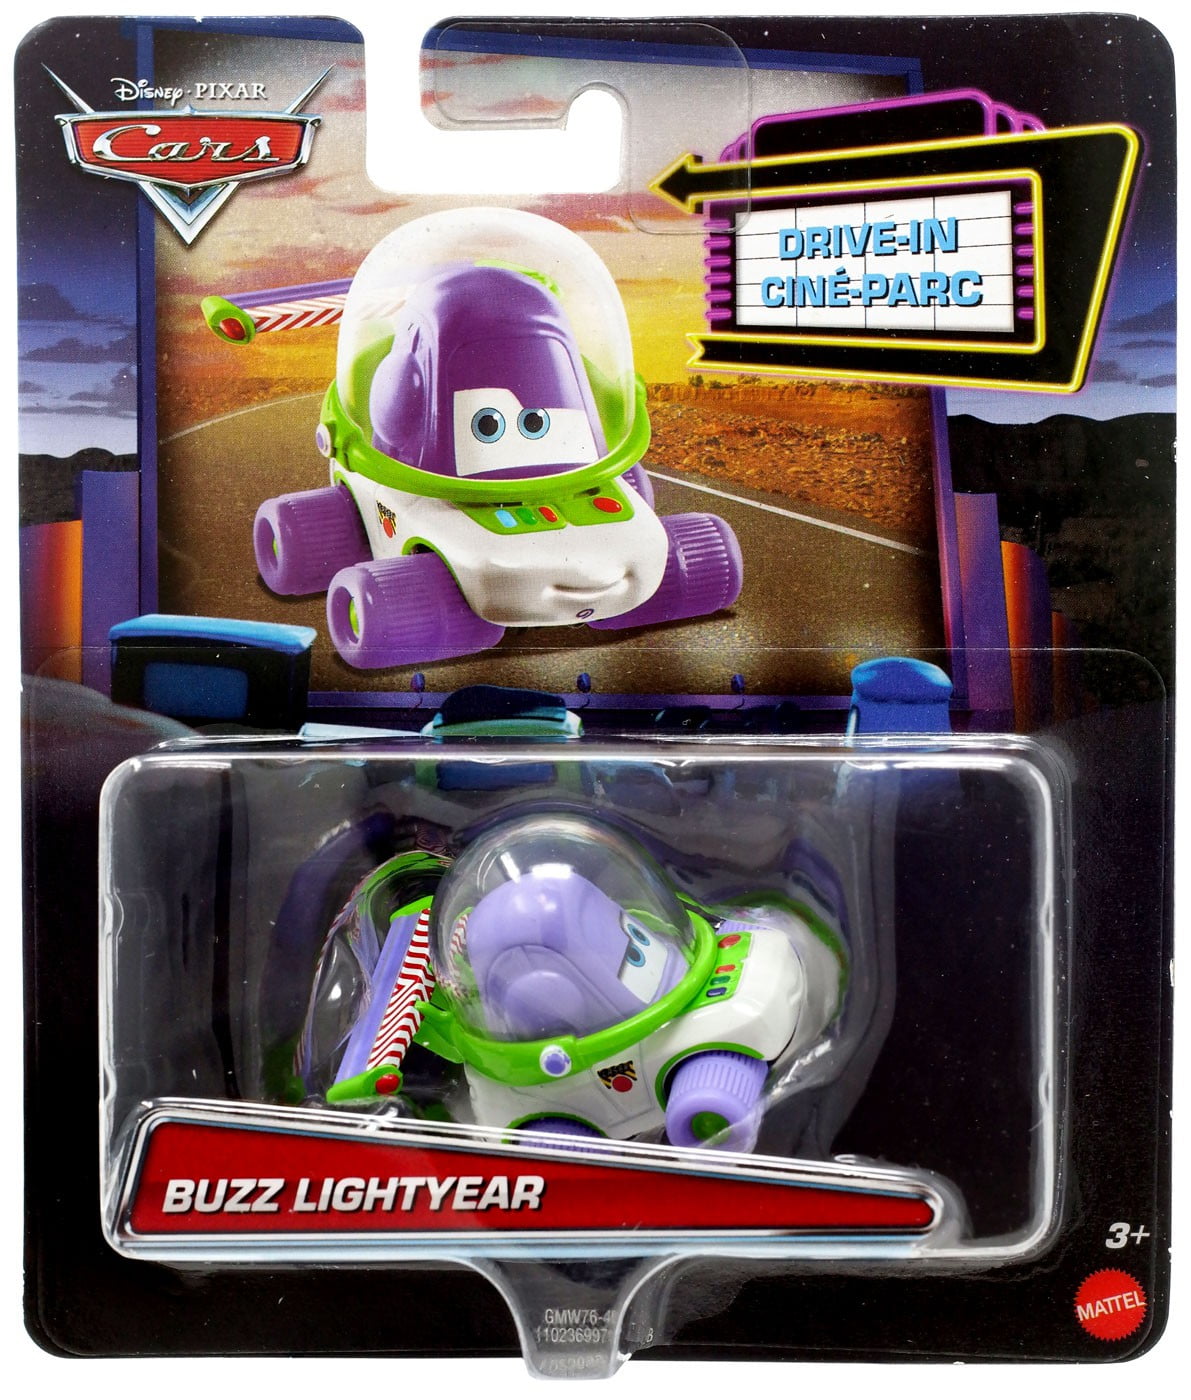 PIXAR CARS Toy Story BUZZ LIGHTYEAR DRIVE-IN Diecast CAR Mattel remix Disney 